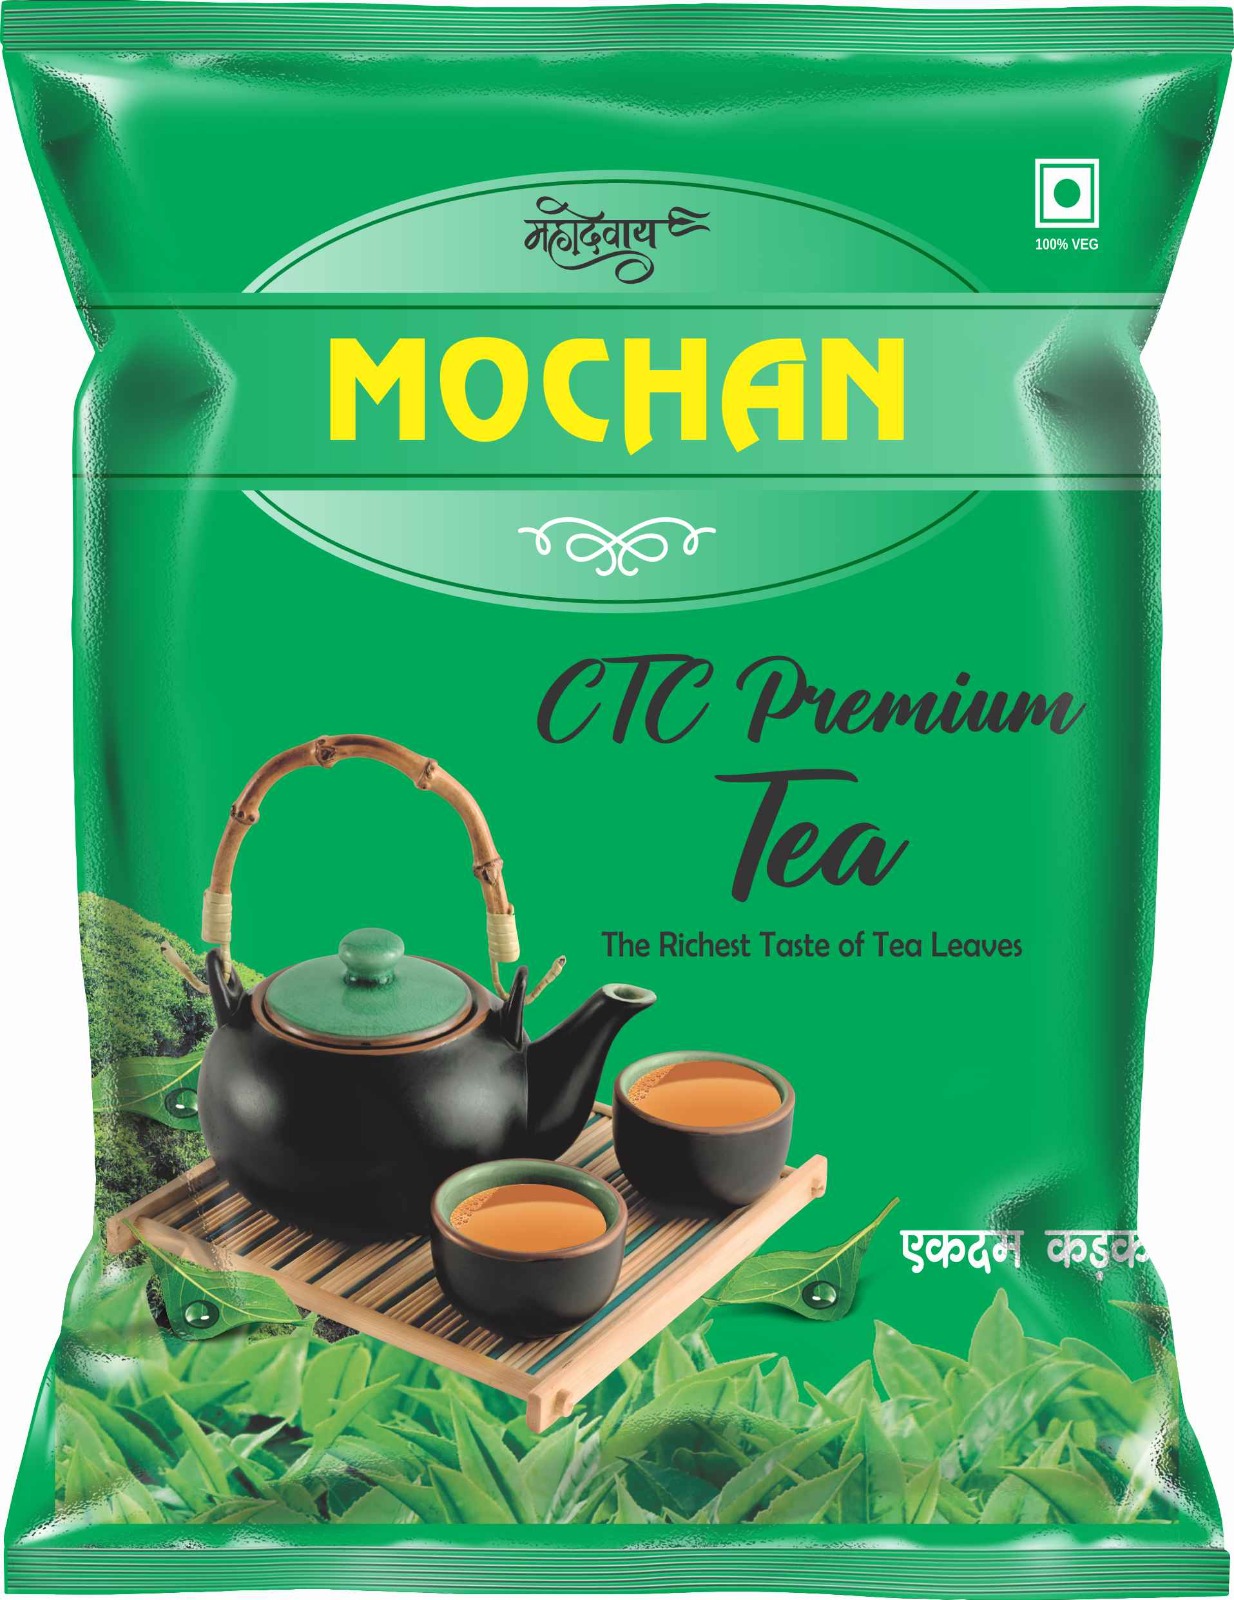 Mochan Premium CTC Tea